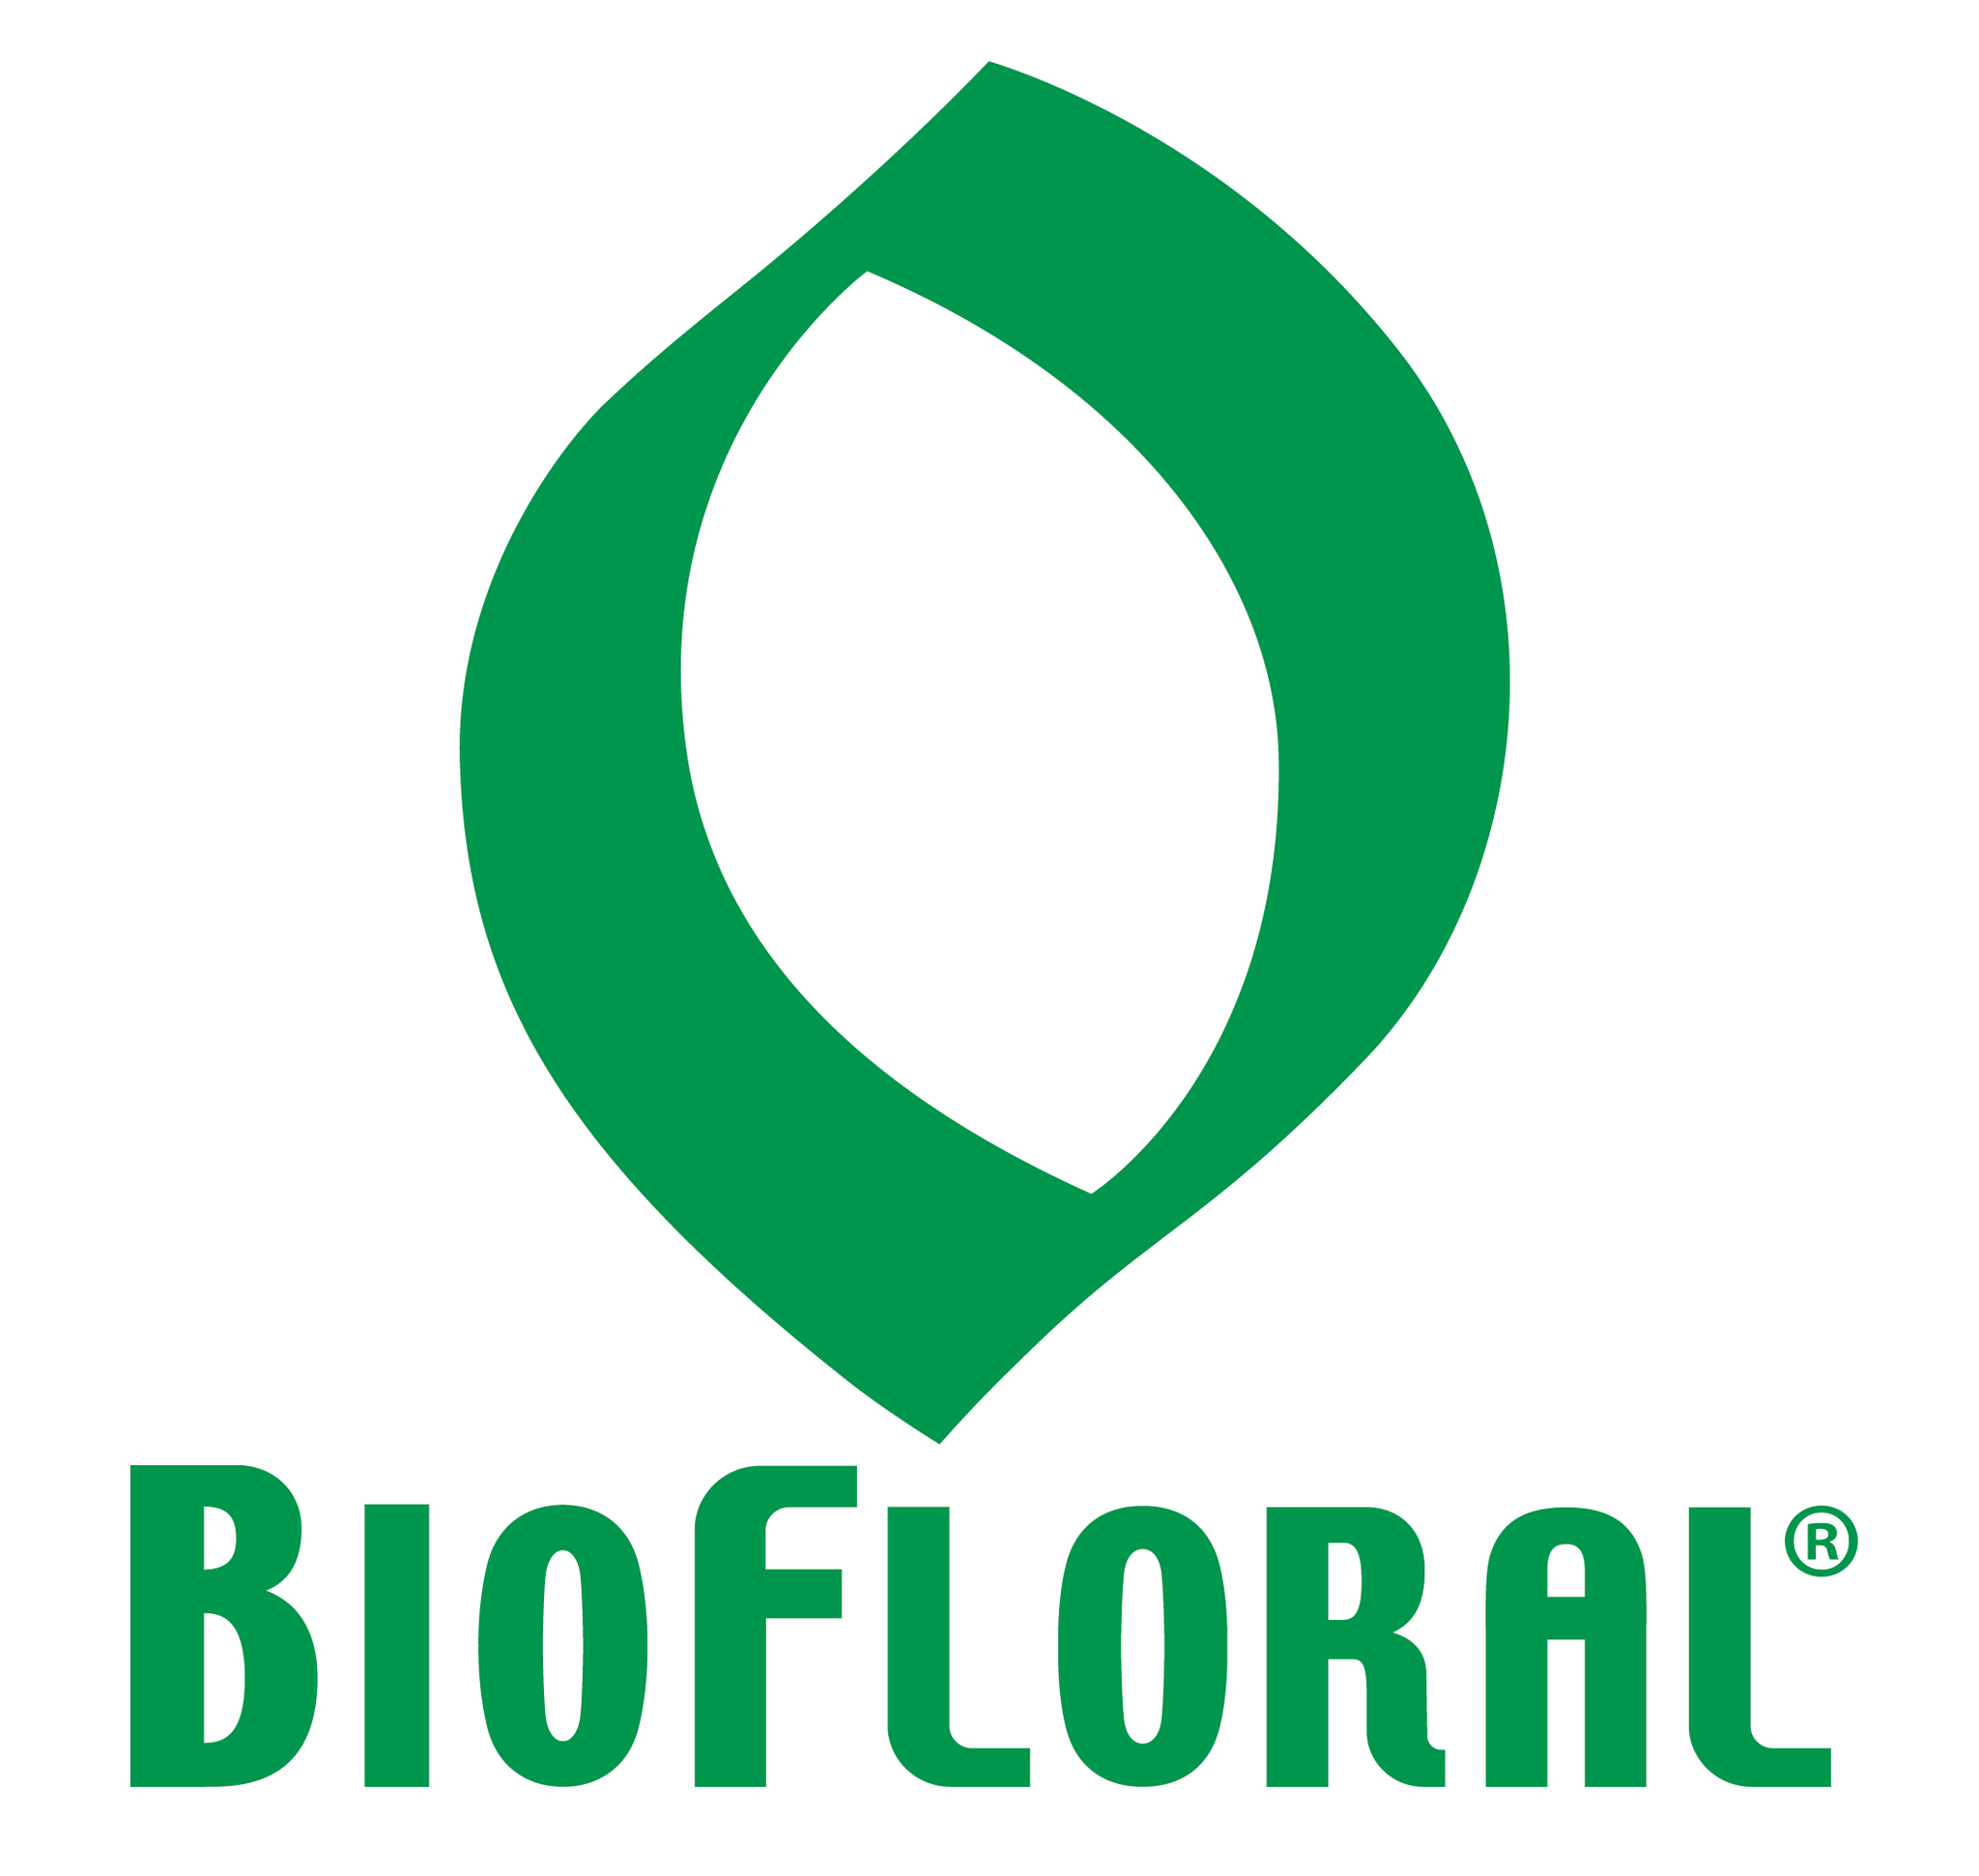 Biofloral Canada's logo